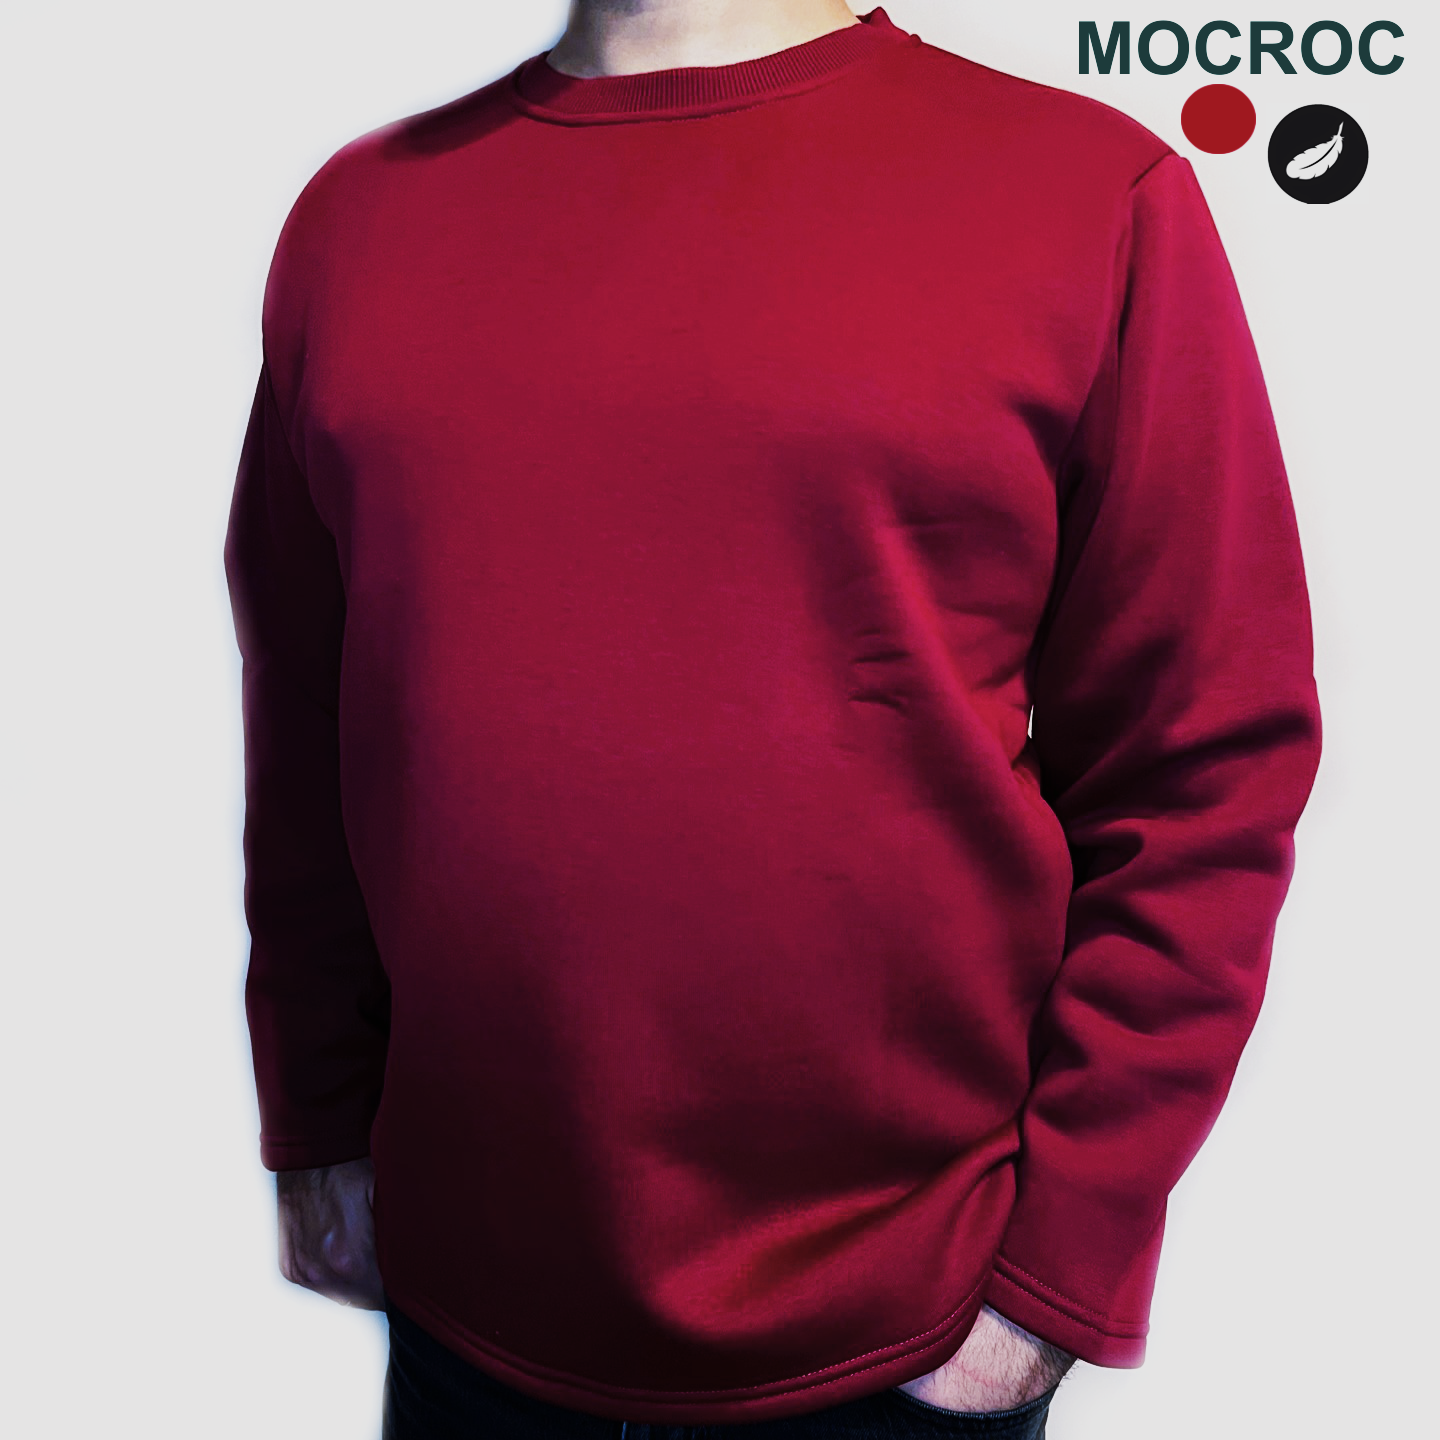 Пуловер Mocroc